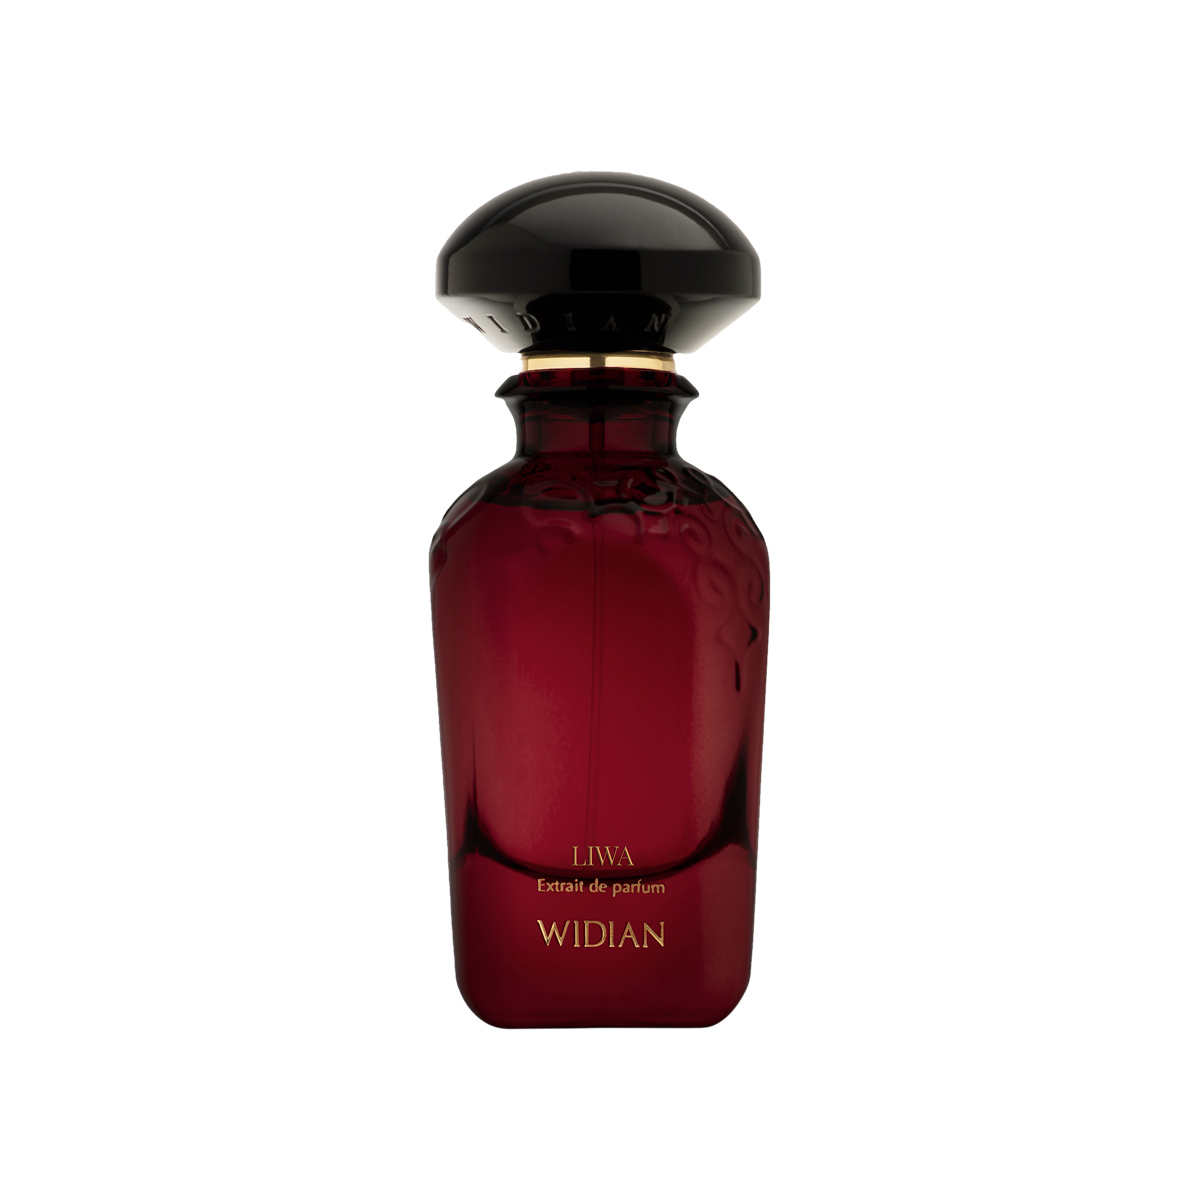 Widian - Liwa Eau de Parfum